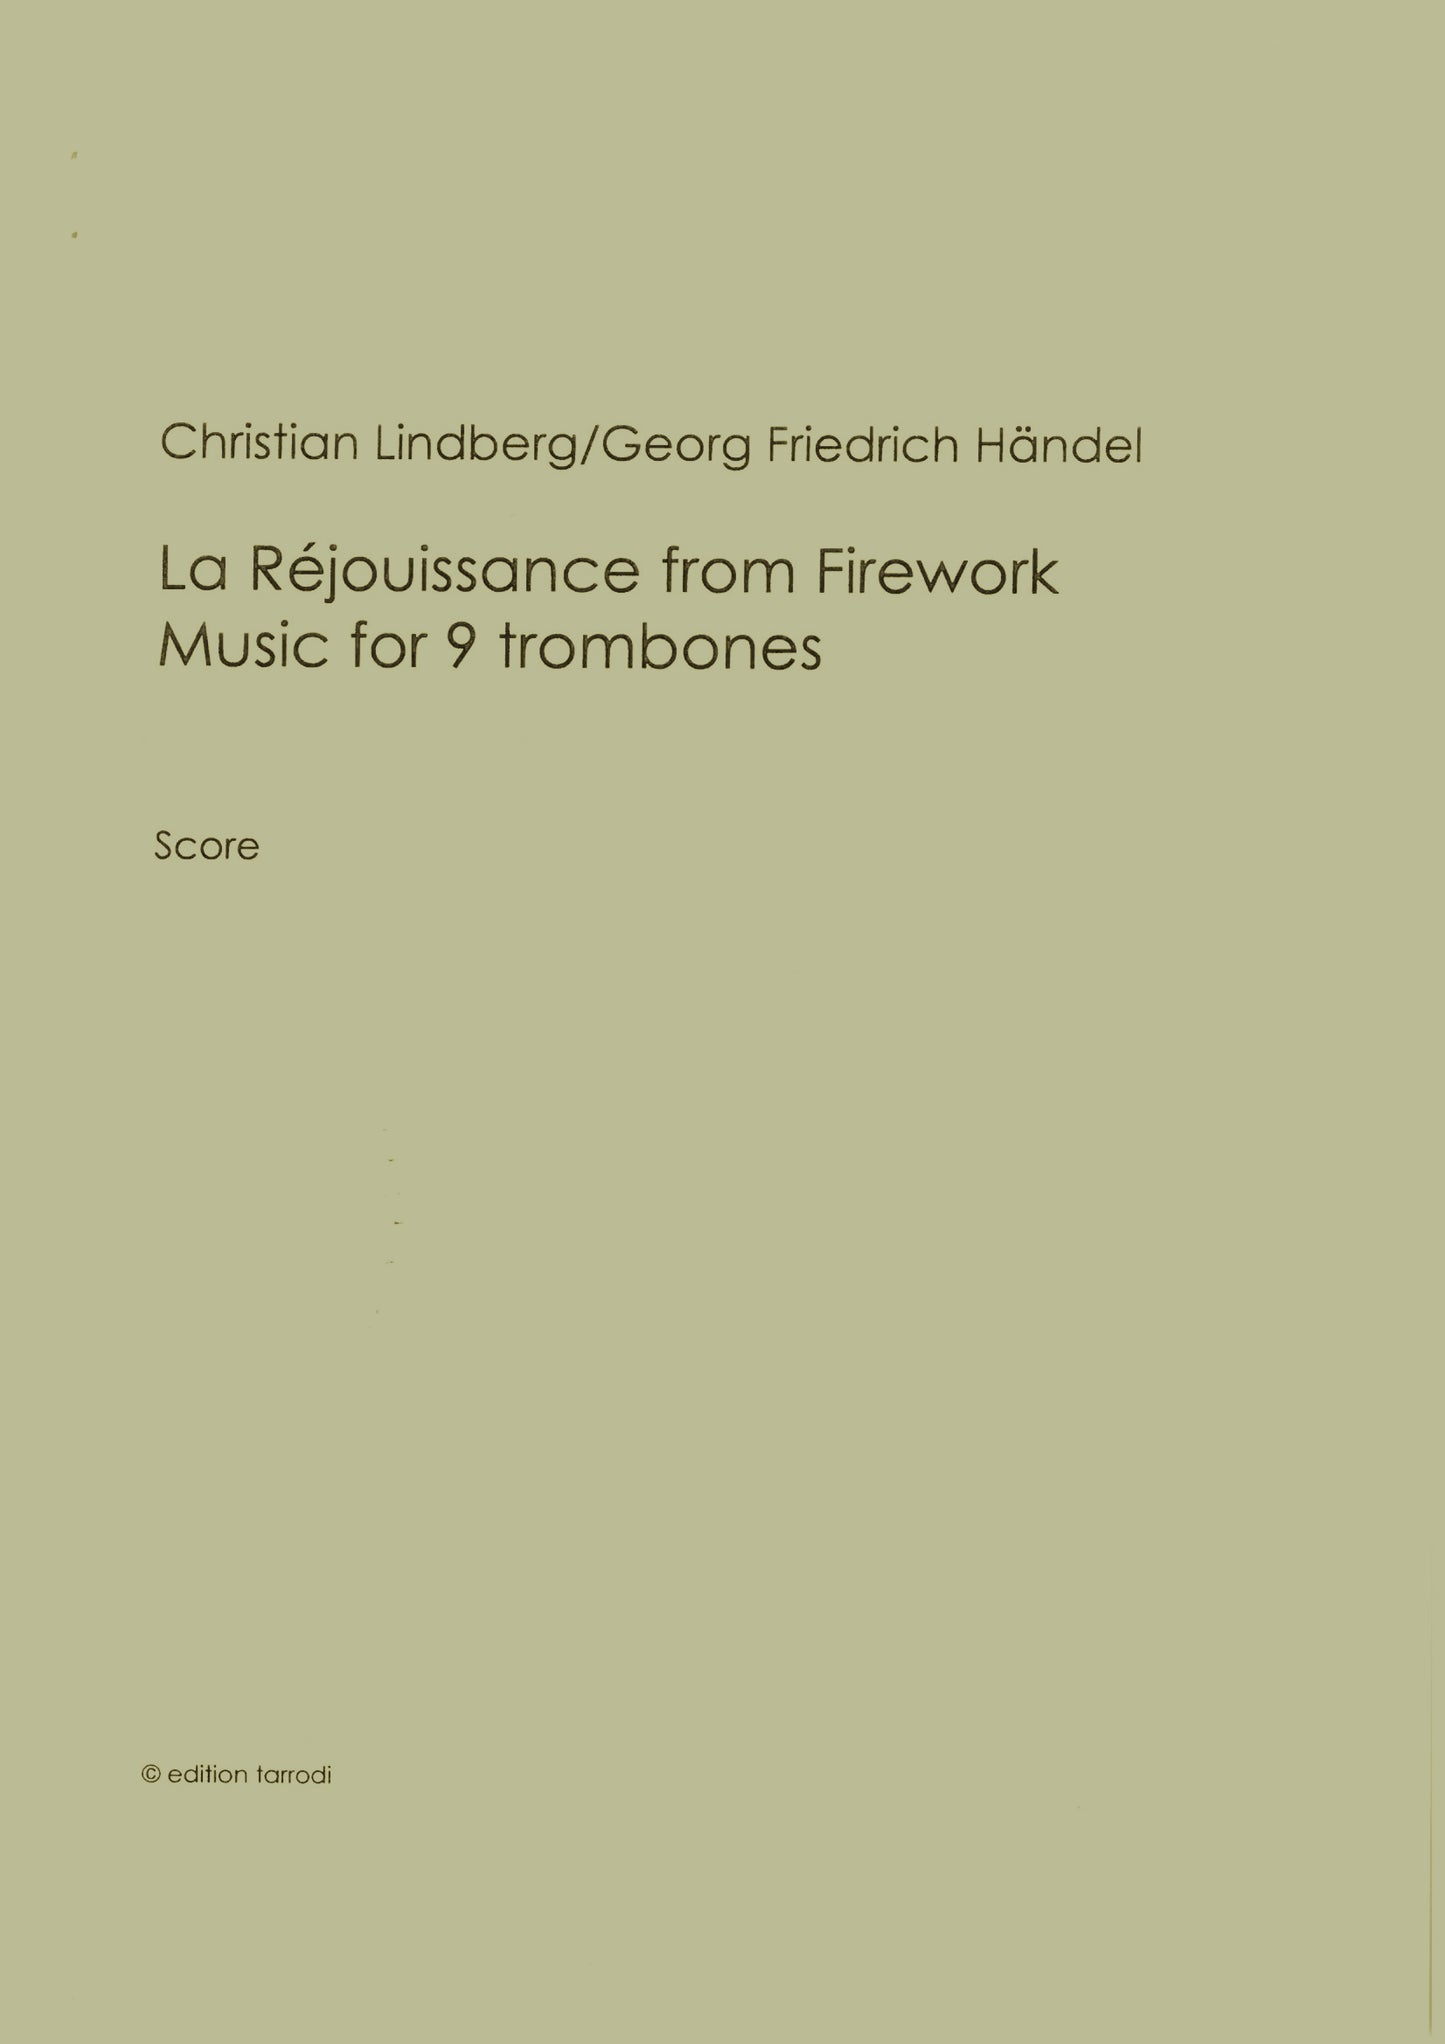 Christian Lindberg/Georg Friedrich Händel - La Réjouissance from Firewo